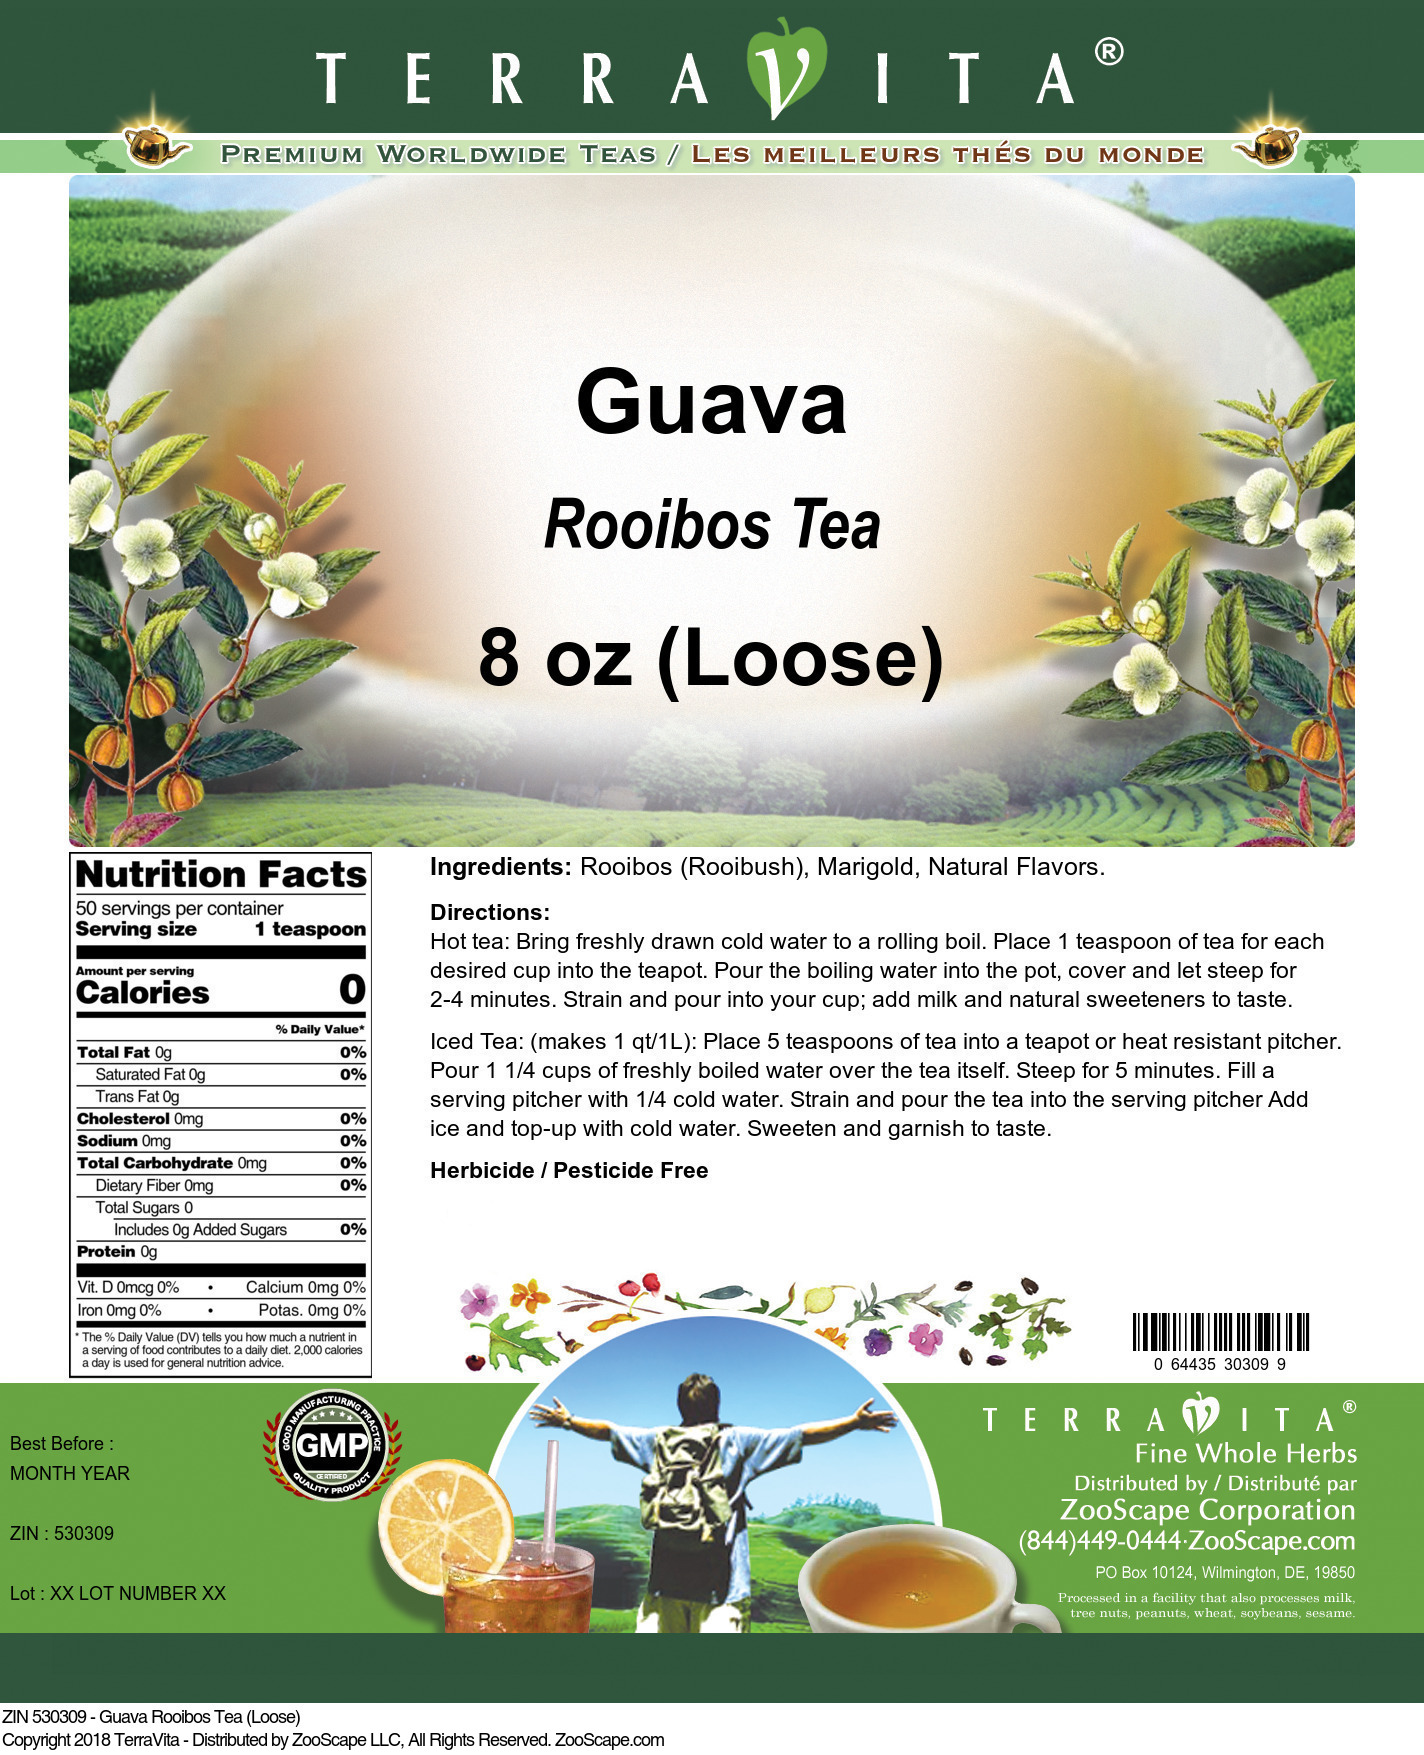 Guava Rooibos Tea (Loose) - Label